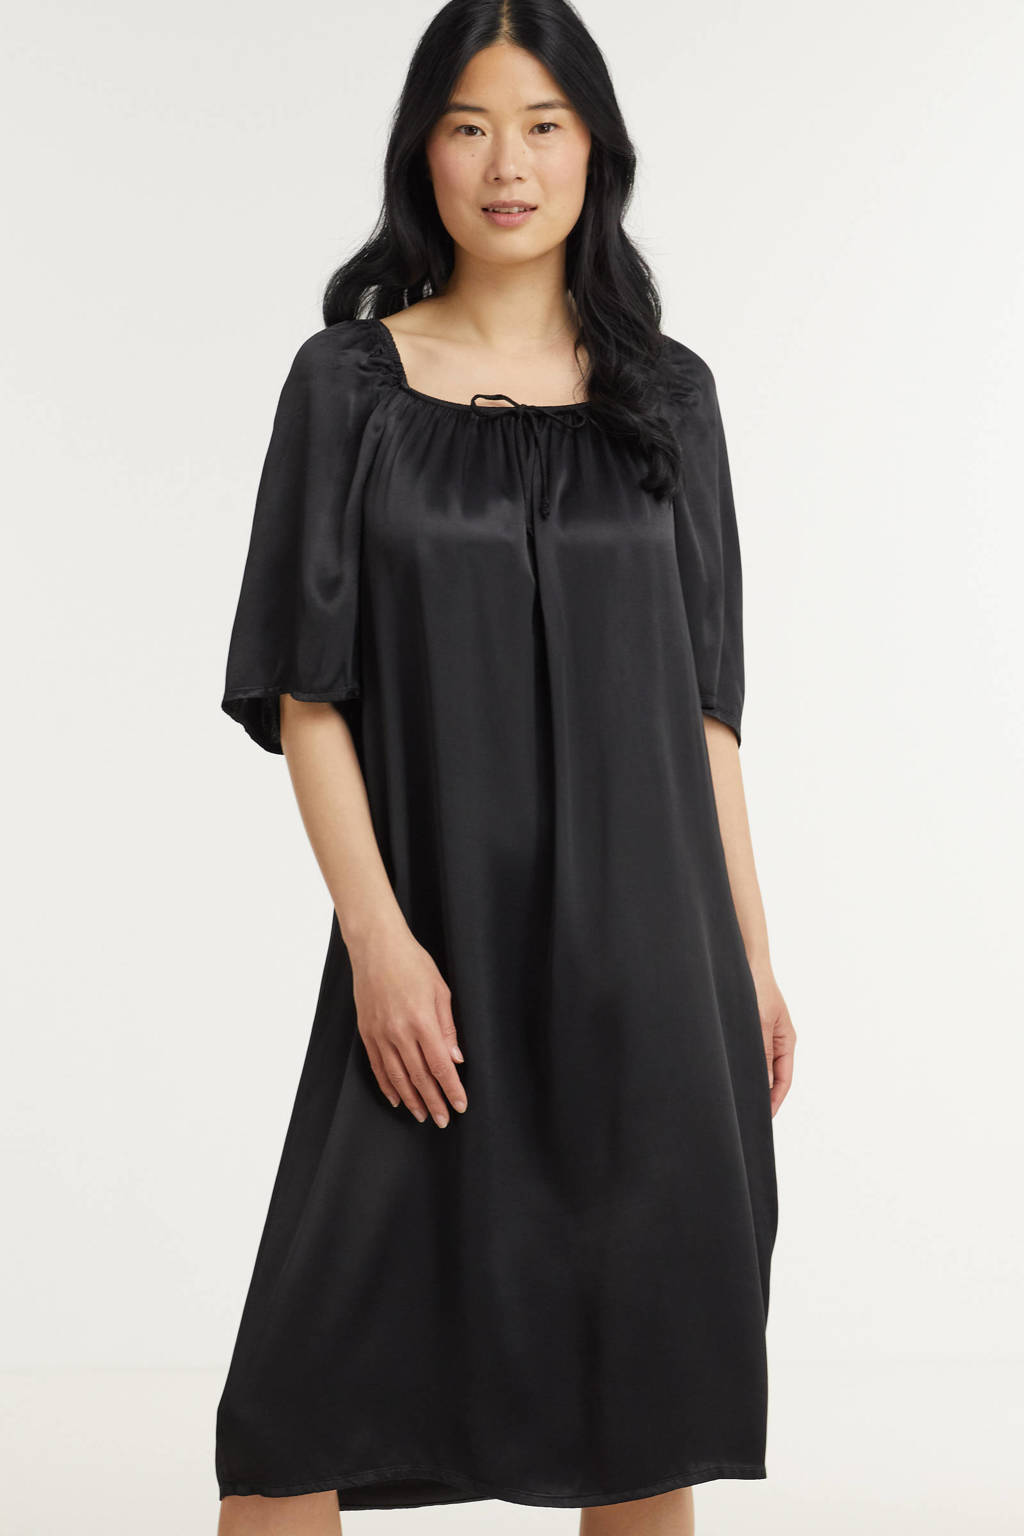 Zwarte dames Transfer jurk van viscose met half lange mouwen, ronde hals en knoopdetail